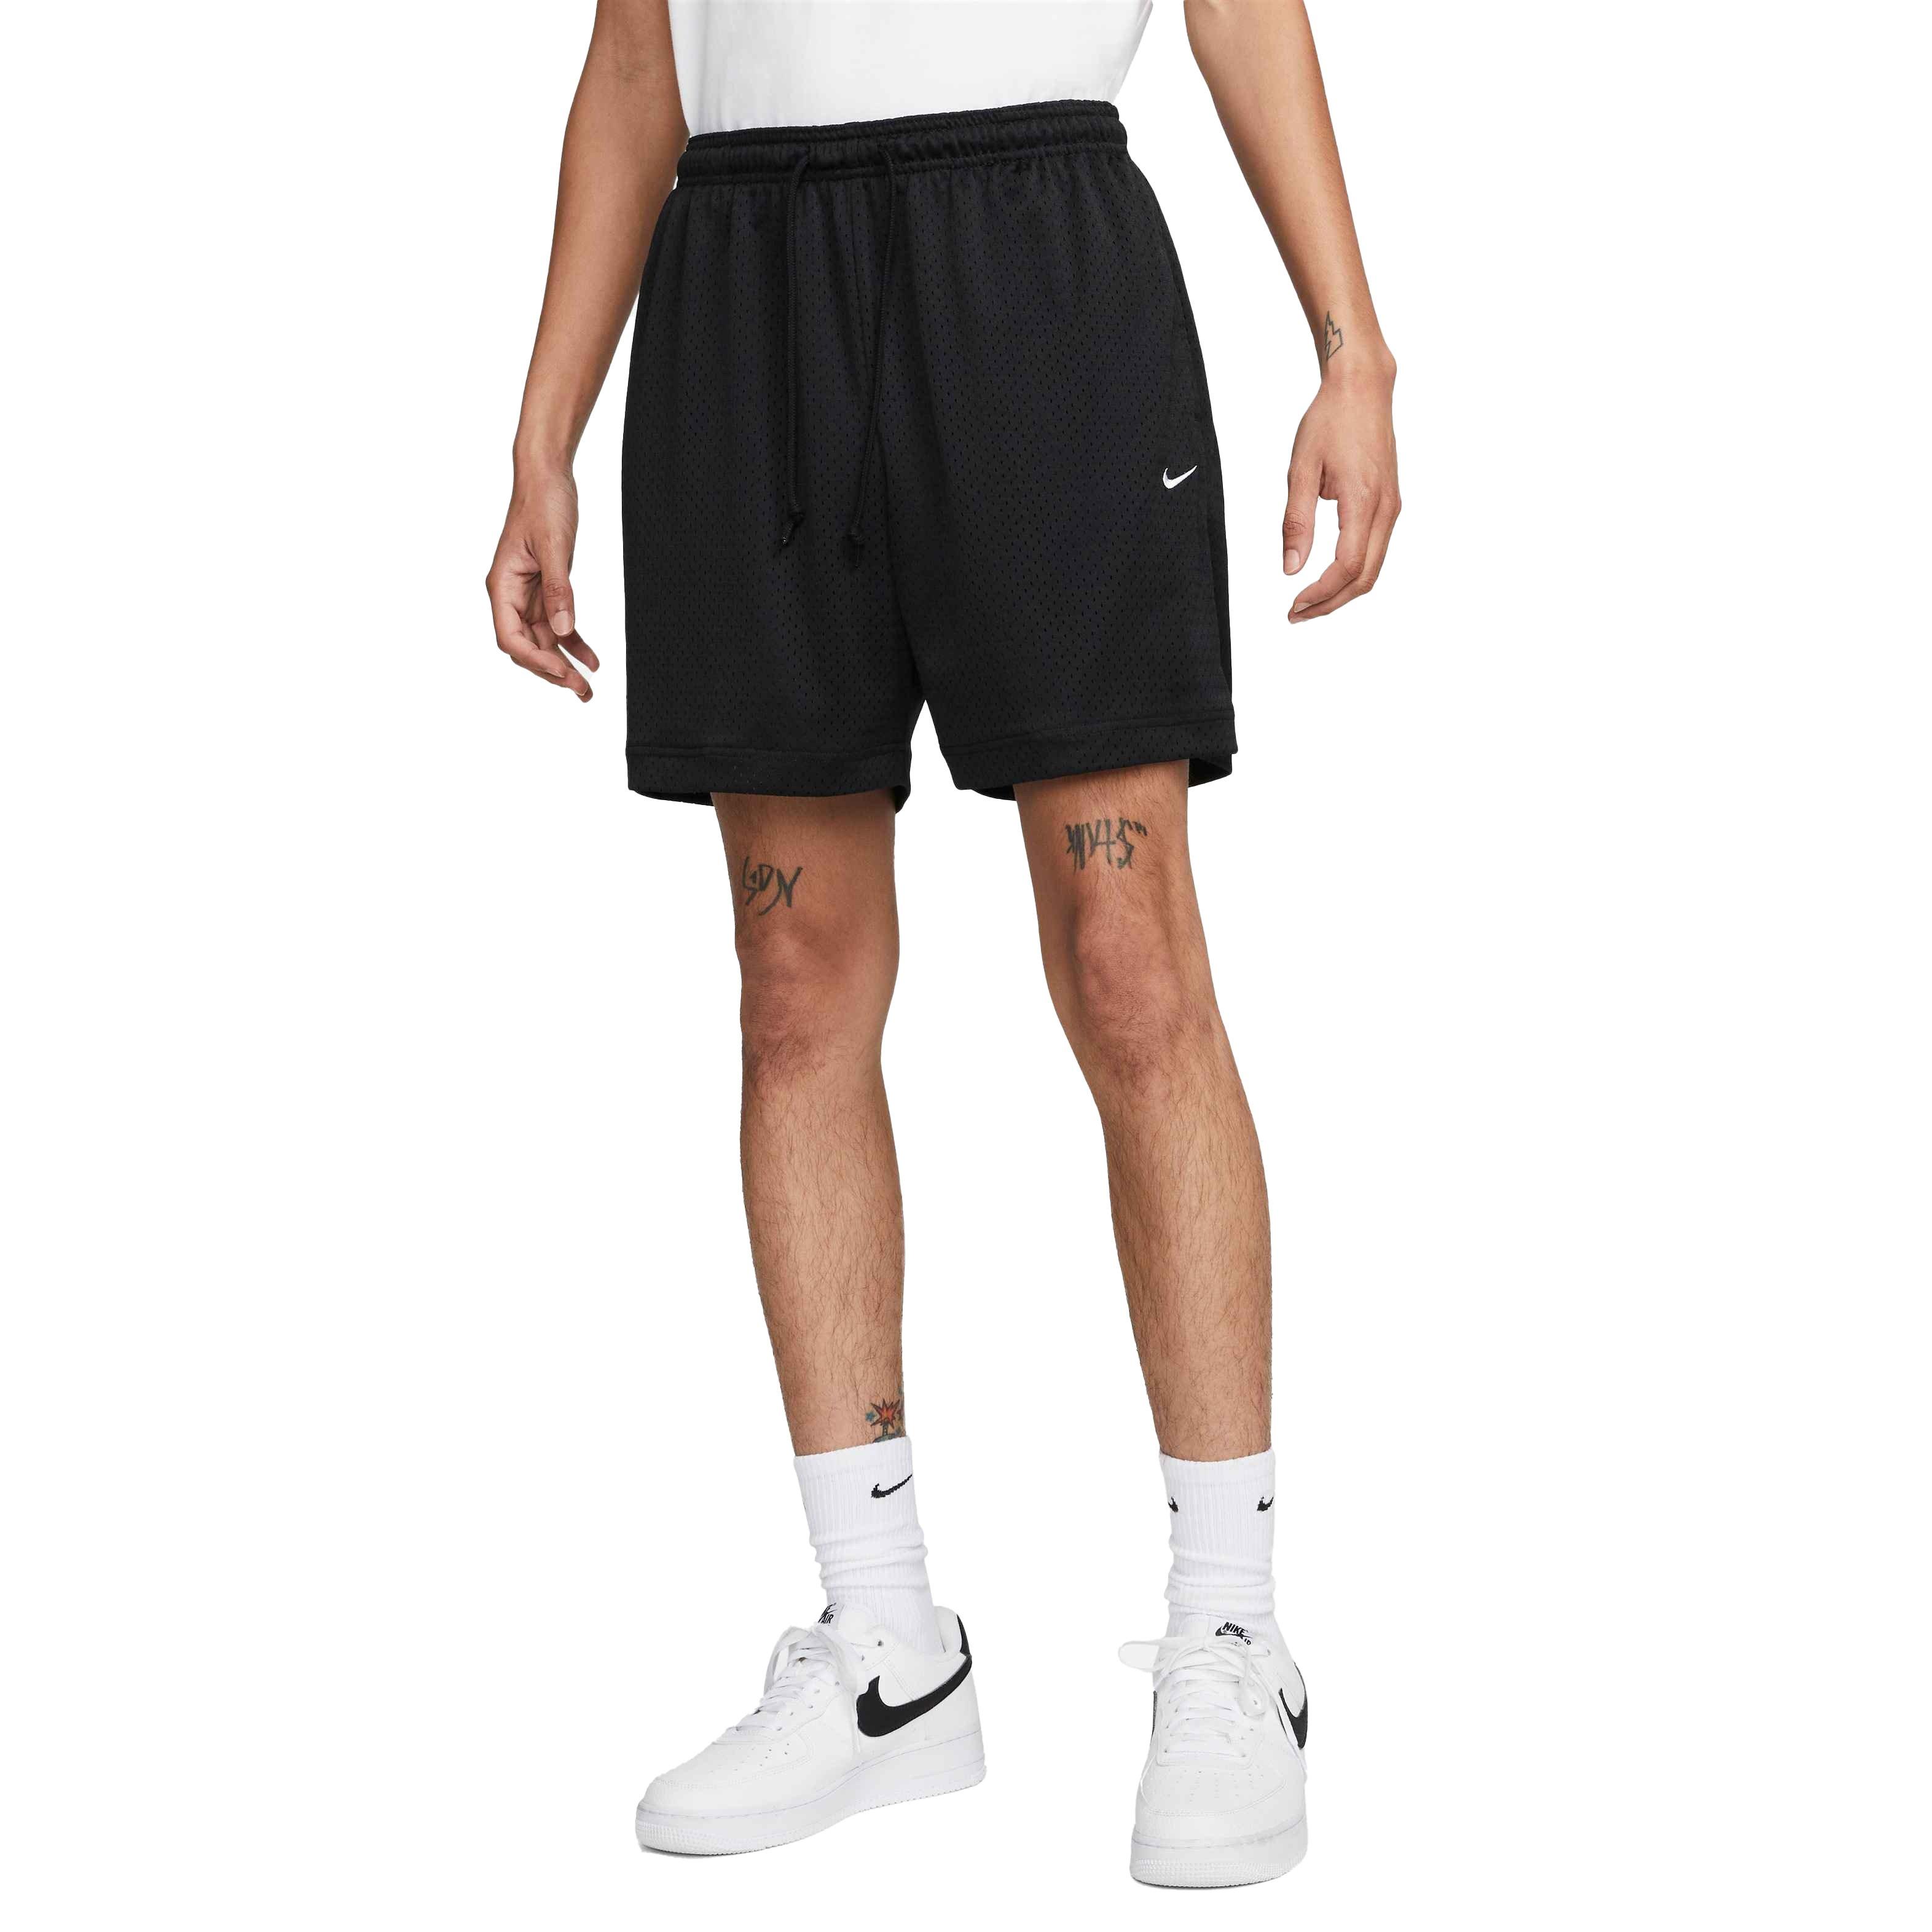 Nike Digital Tropical Pack all over print mesh basketball shorts